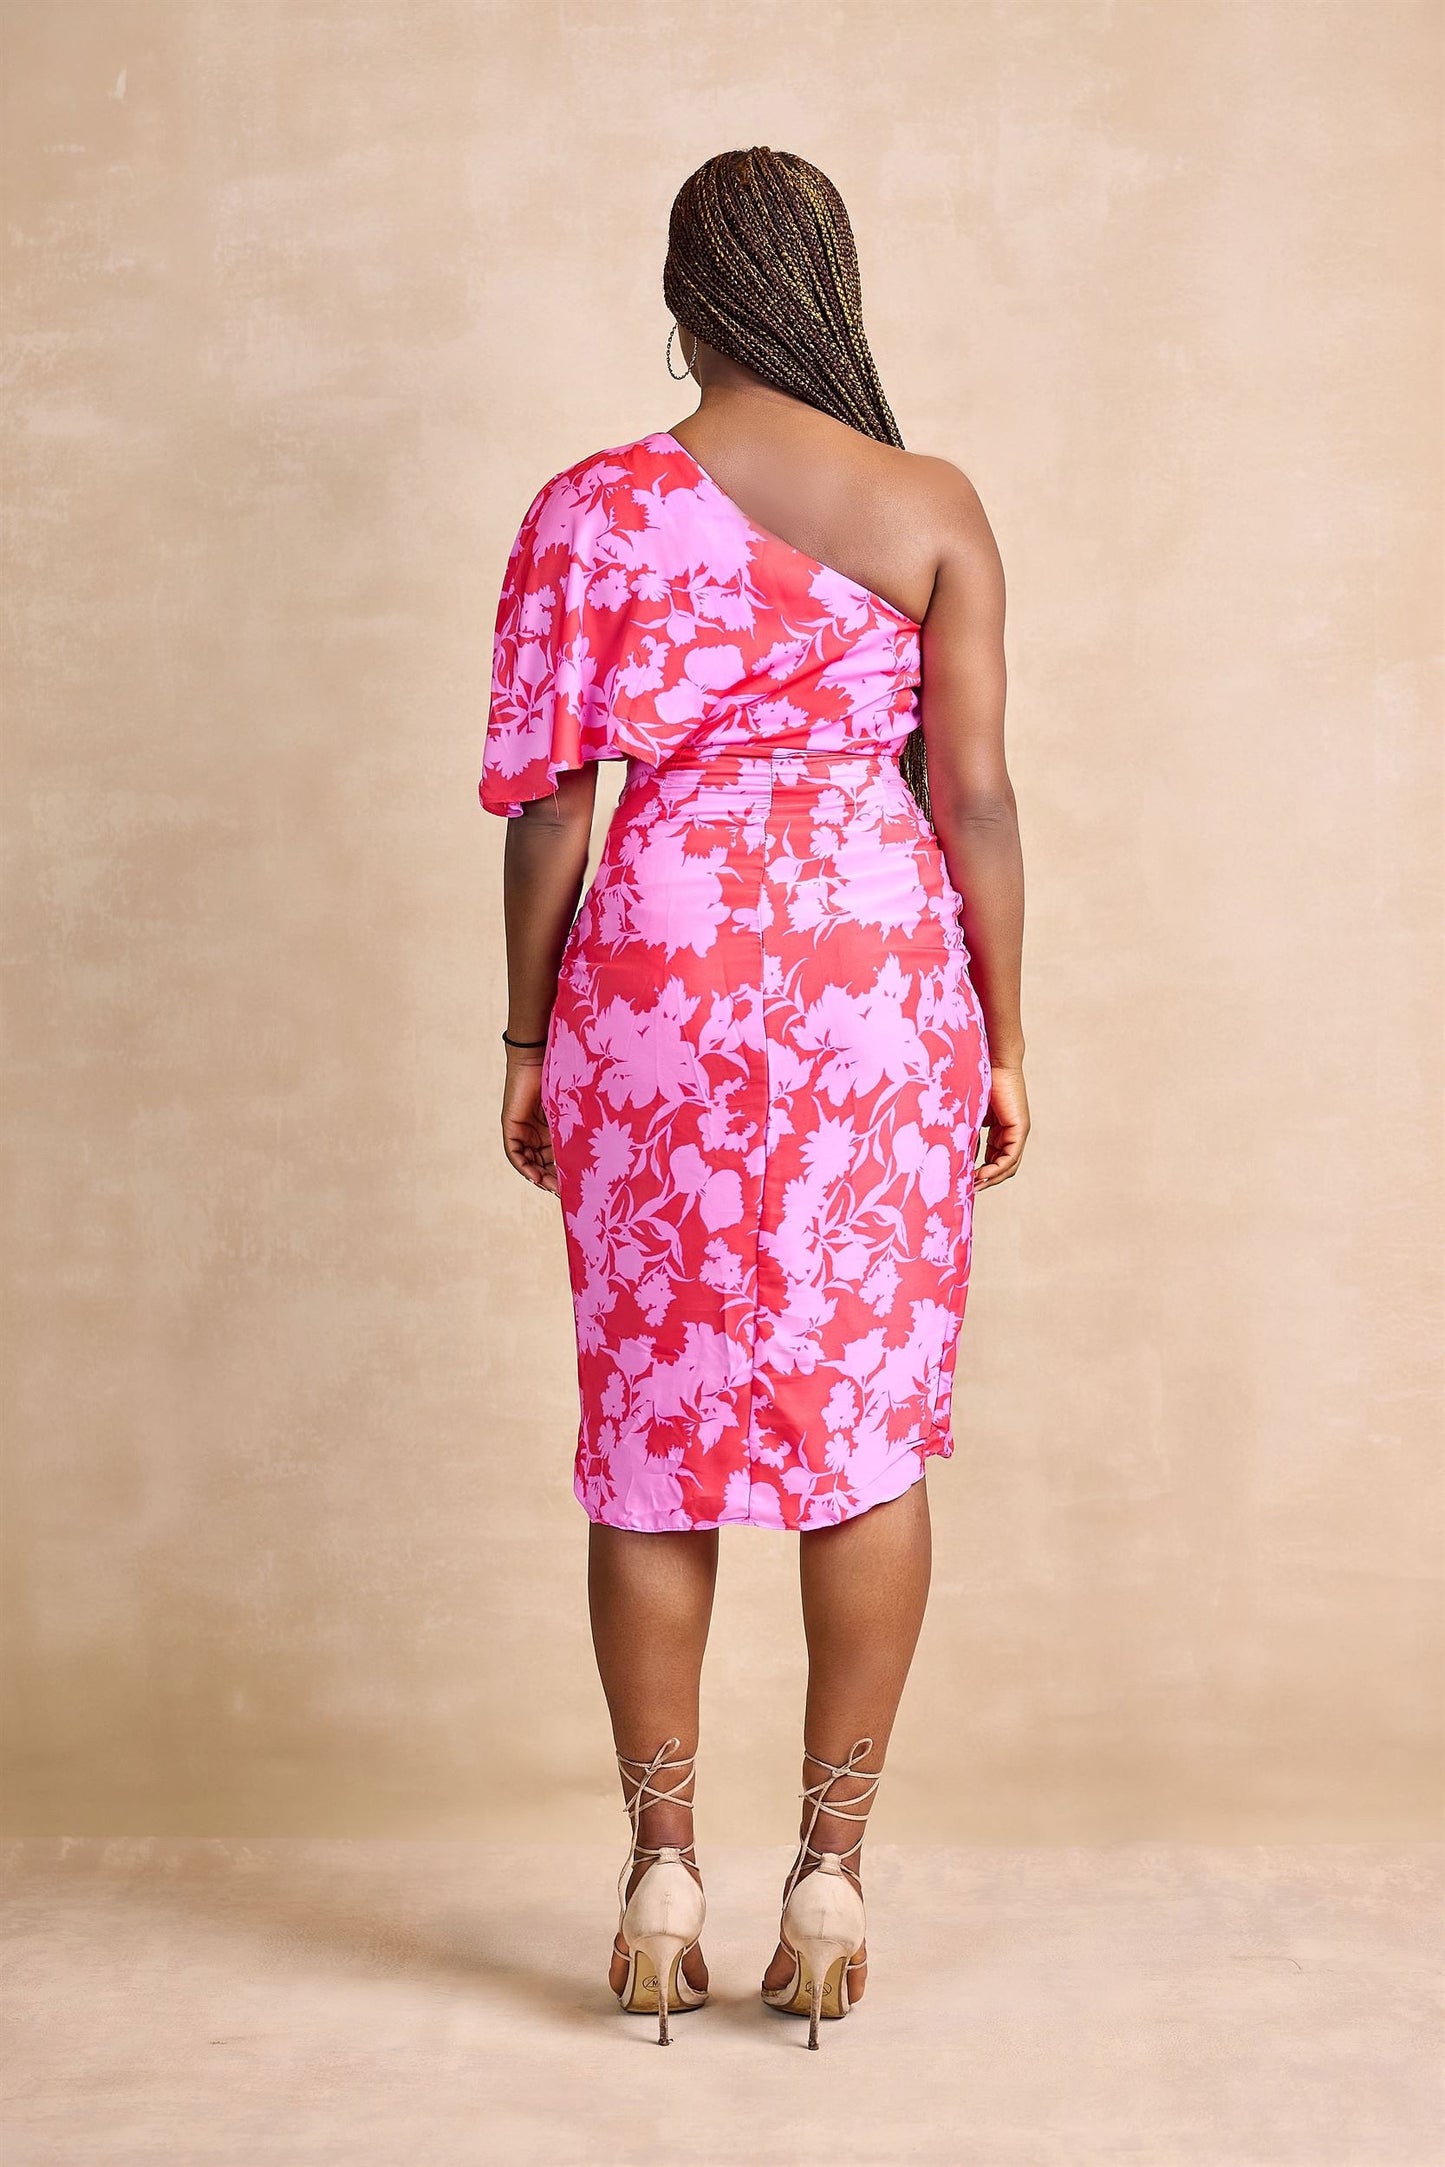 Laide One-Shouldered Floral Print Dress